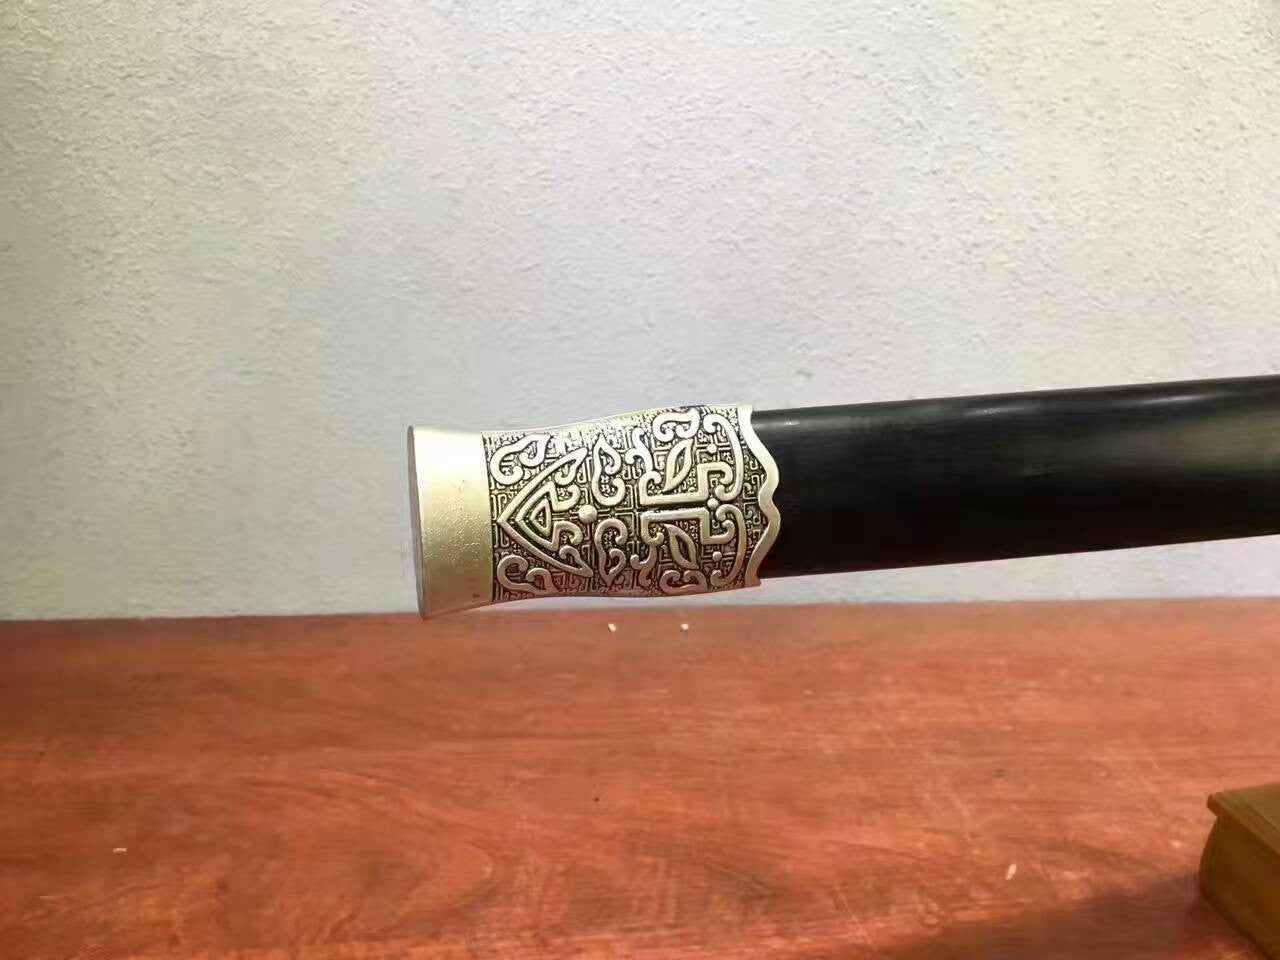 Zhaoyun sword(Damascus Steel blade,Black wood scabbard,Alloy)Length 36" - Chinese sword shop